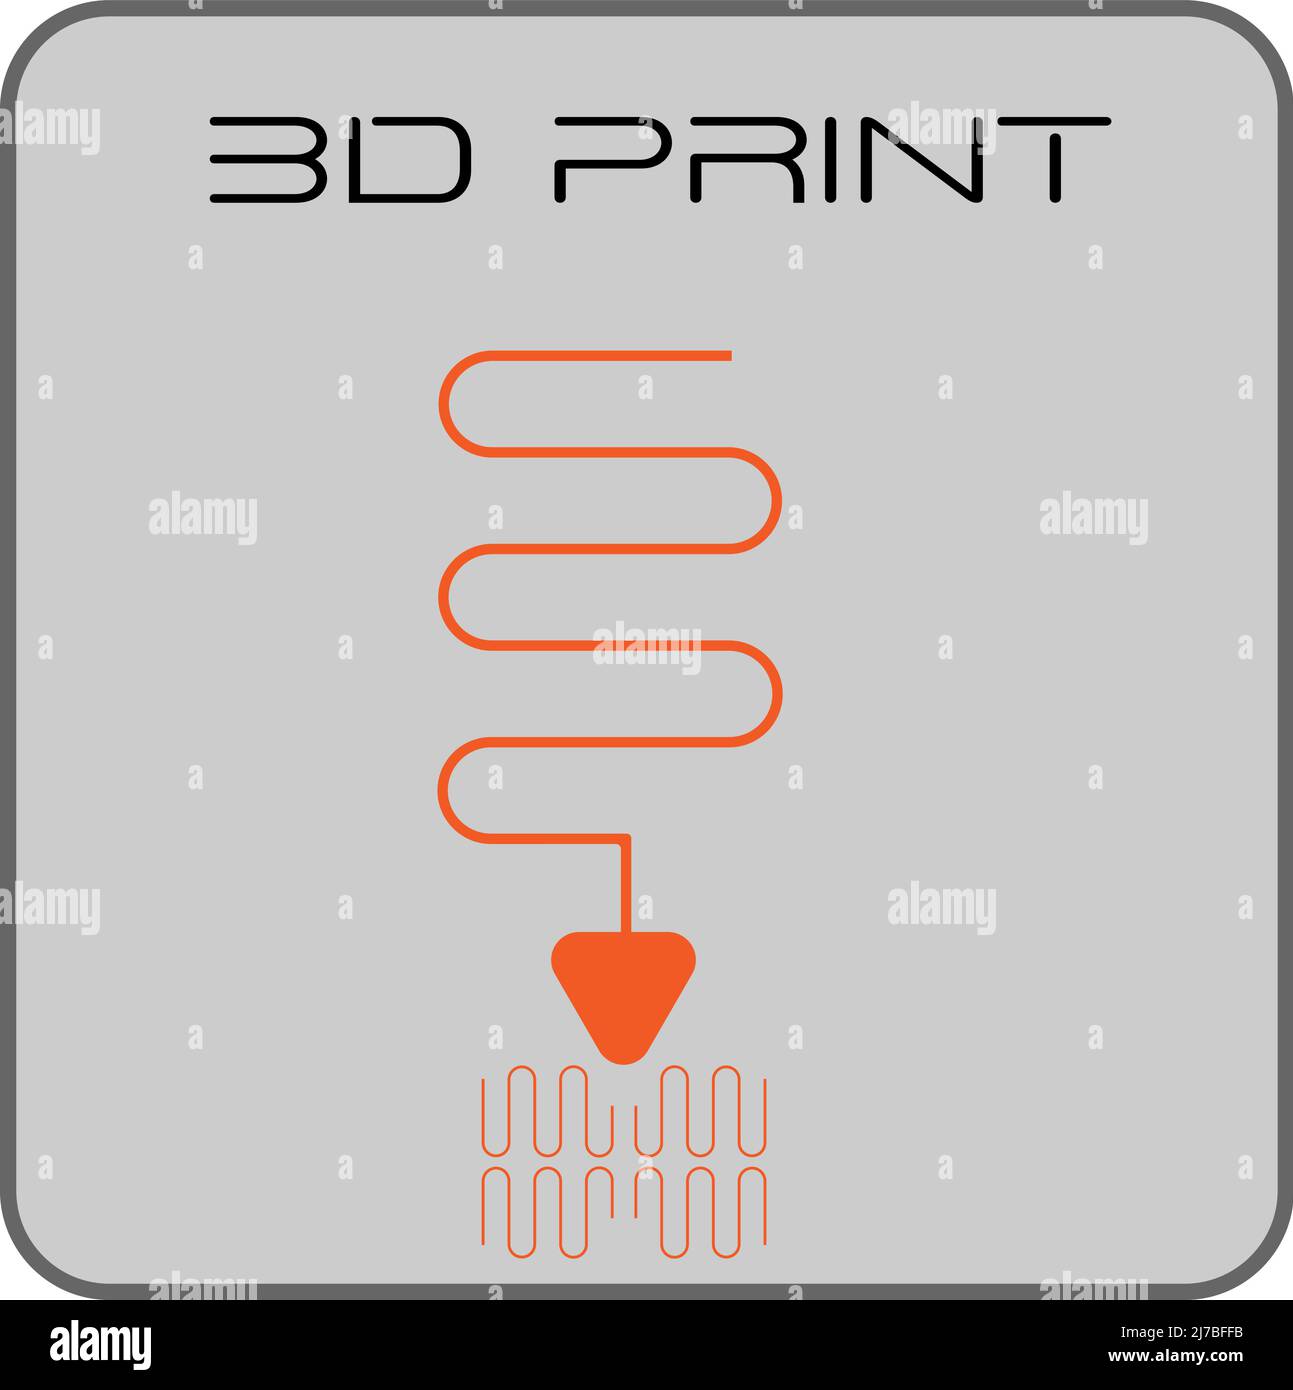 3D Printer flat vector illustration Stock Vector